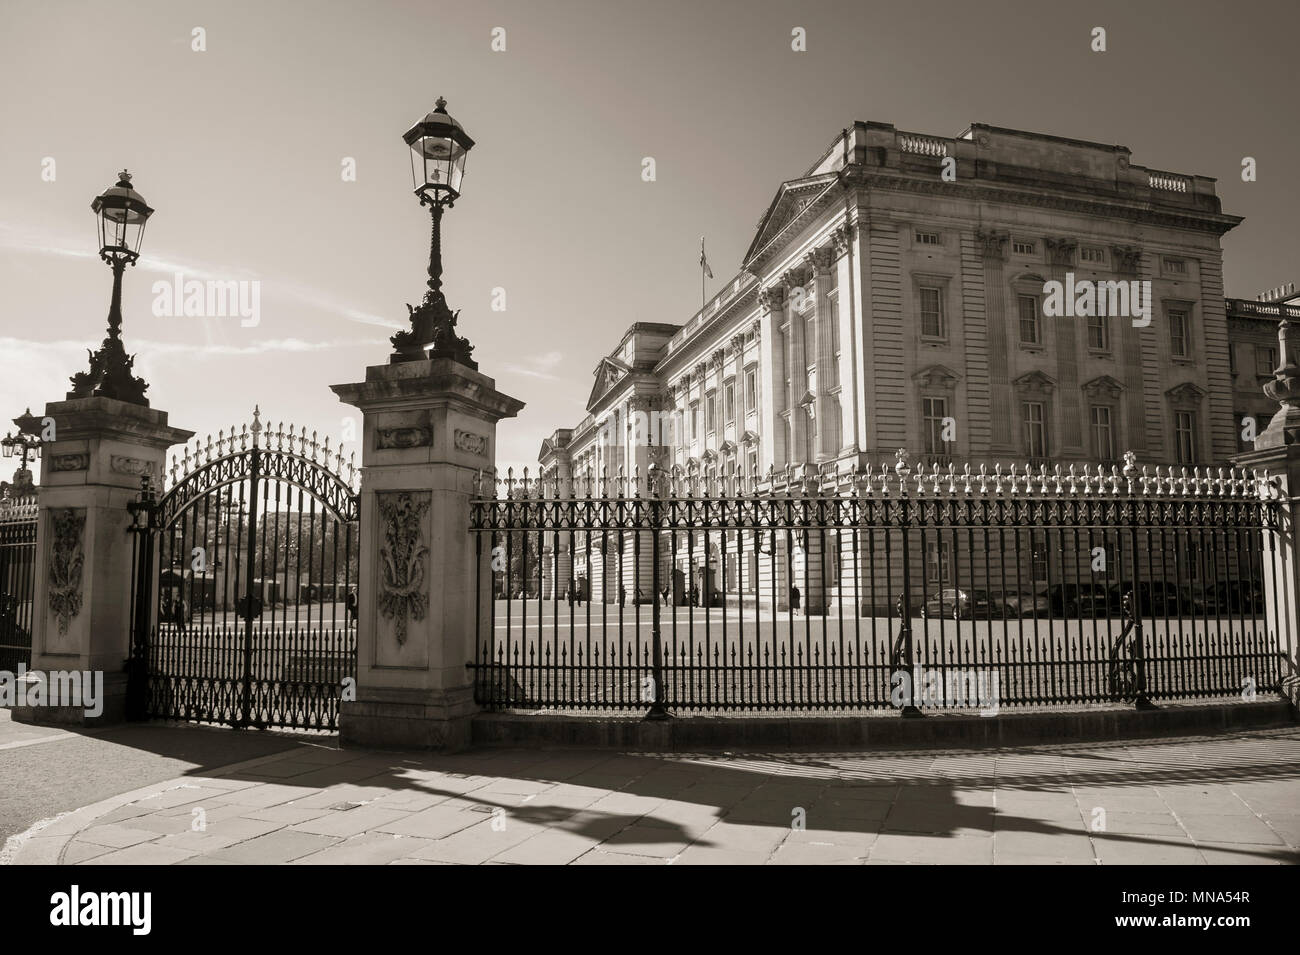 LONDON - MAY 15, 2018: Black and White image of Buckingham Palace behind ornate fence and gates. Stock Photo